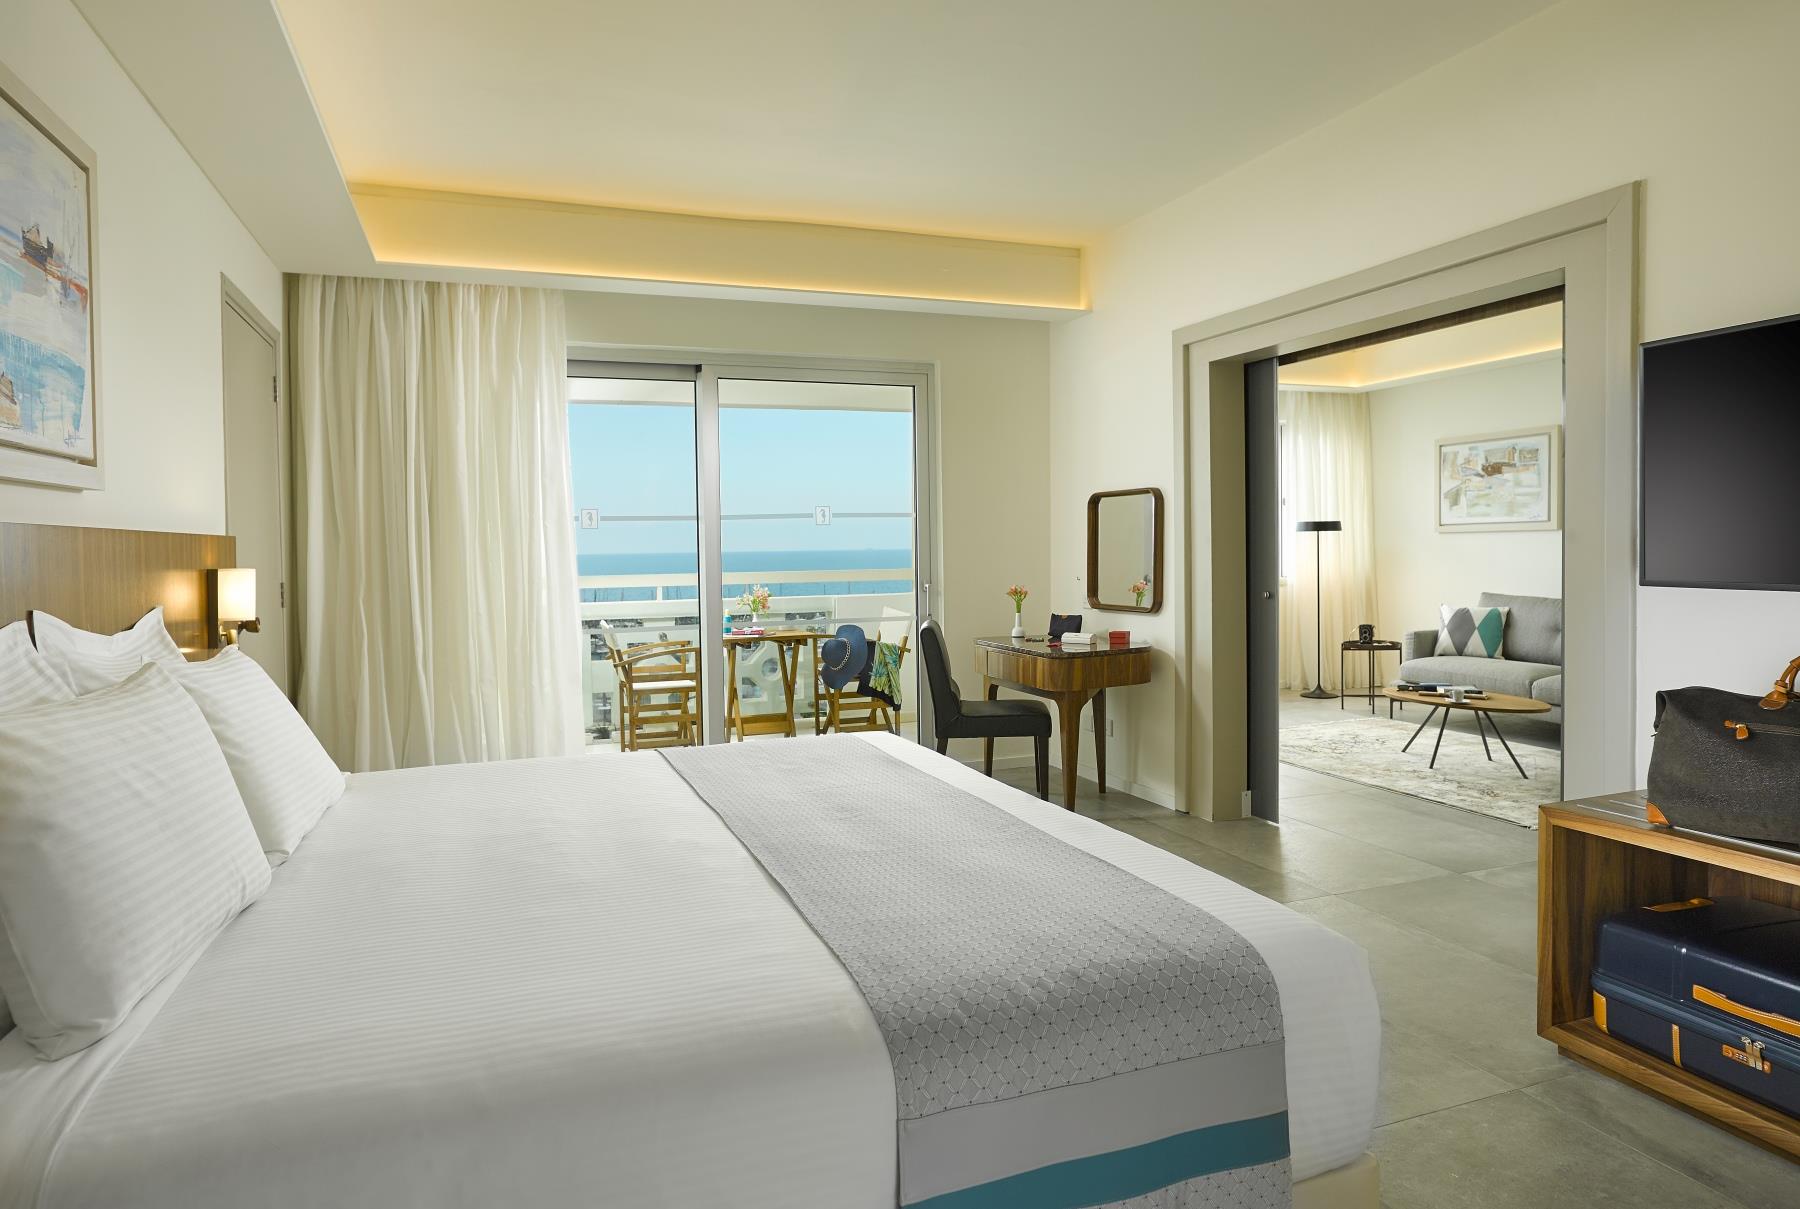 St Raphael Resort & Marina 5*